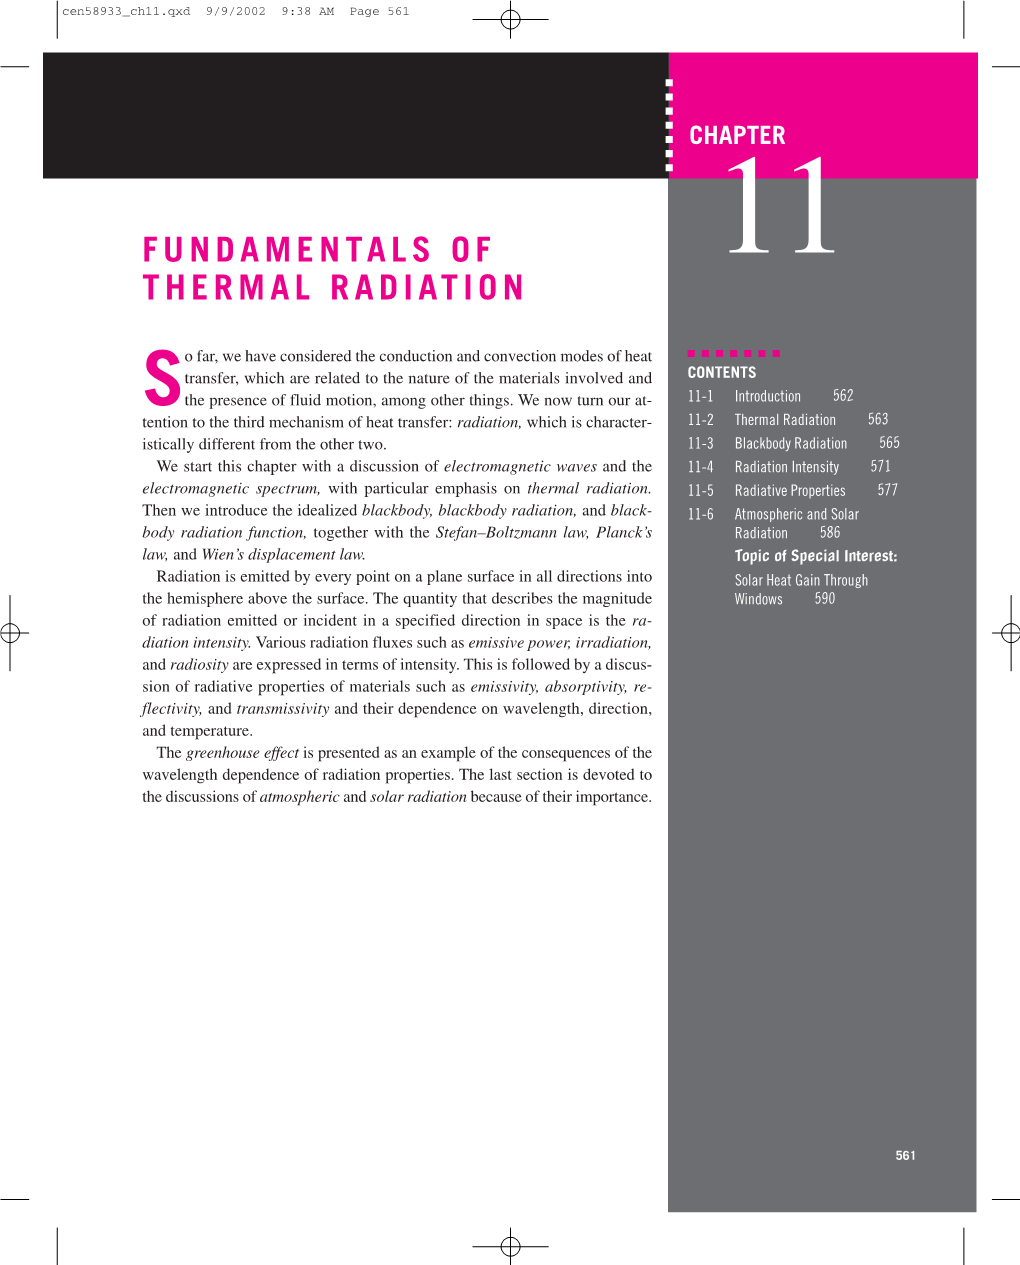 Fundamentals of Thermal Radiation